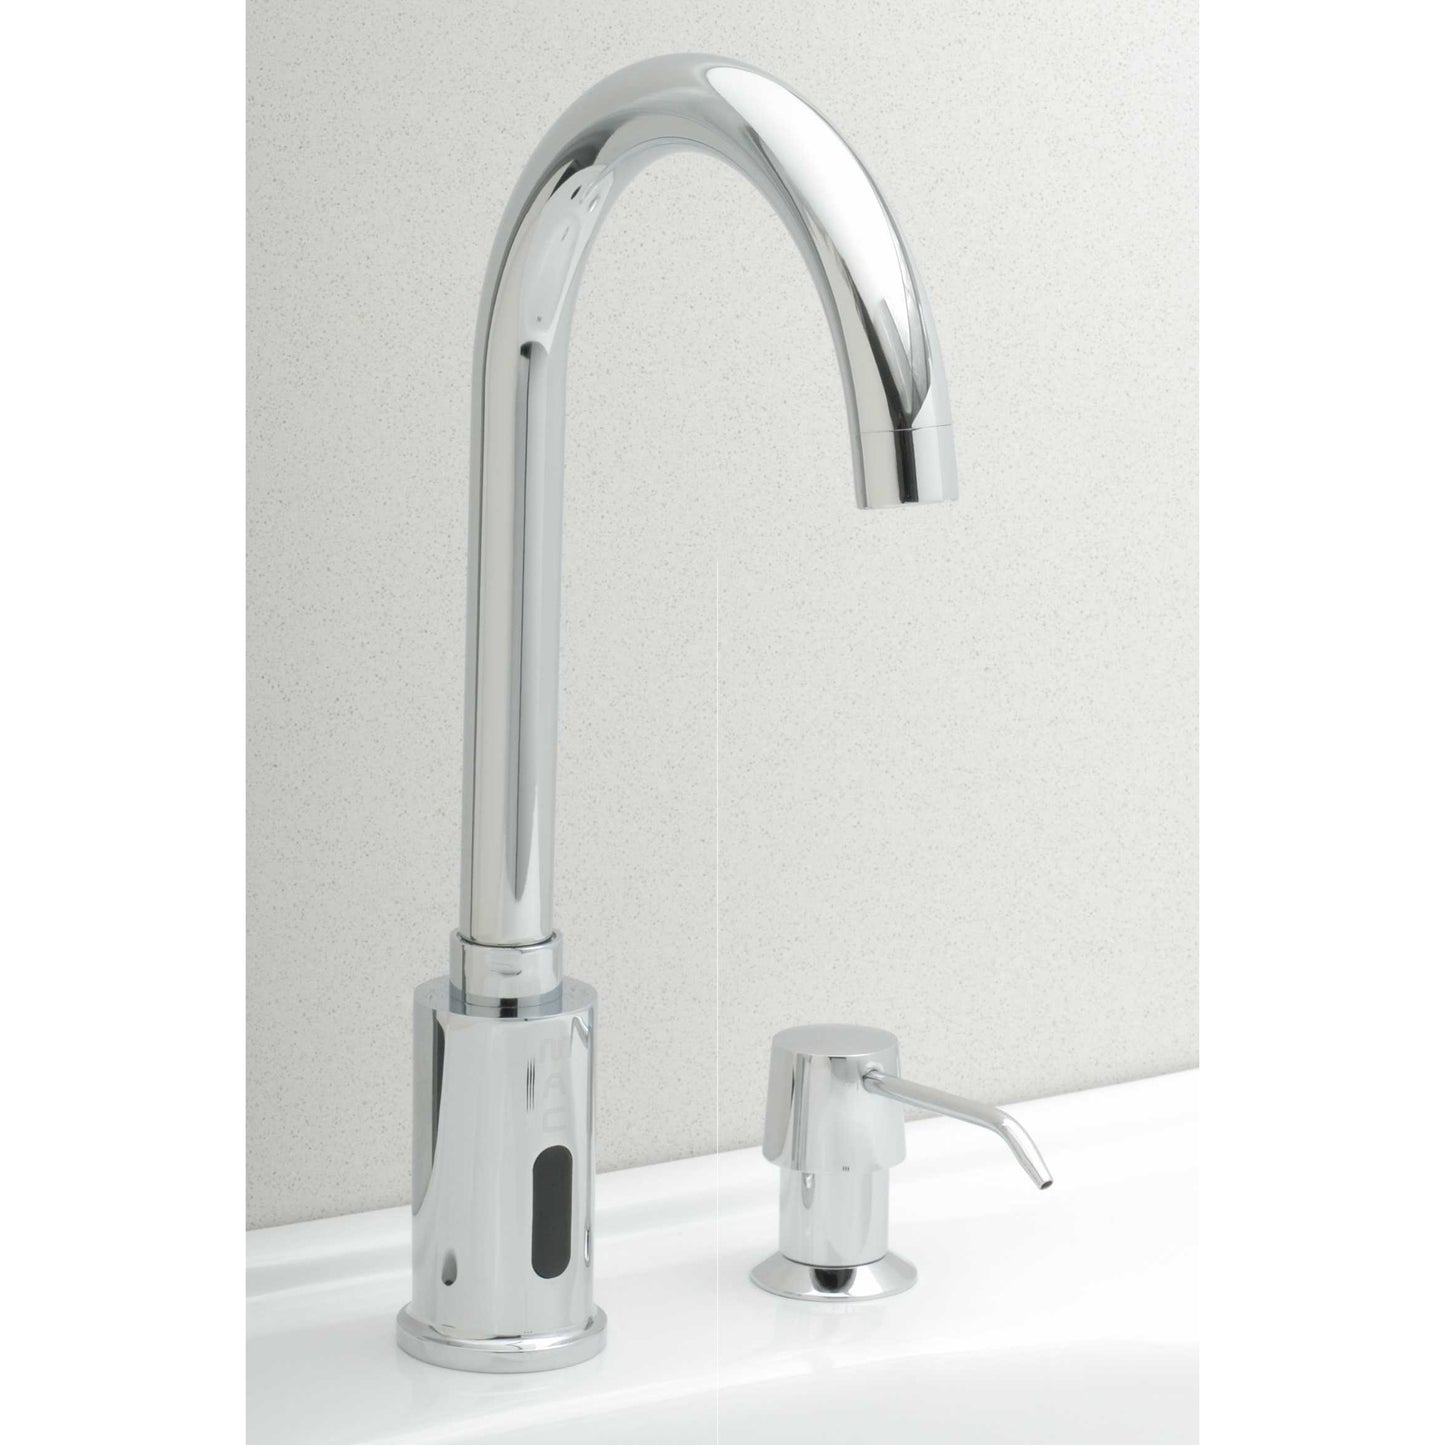 FA444-31S Gooseneck sensor faucet with pump type soap dispenser